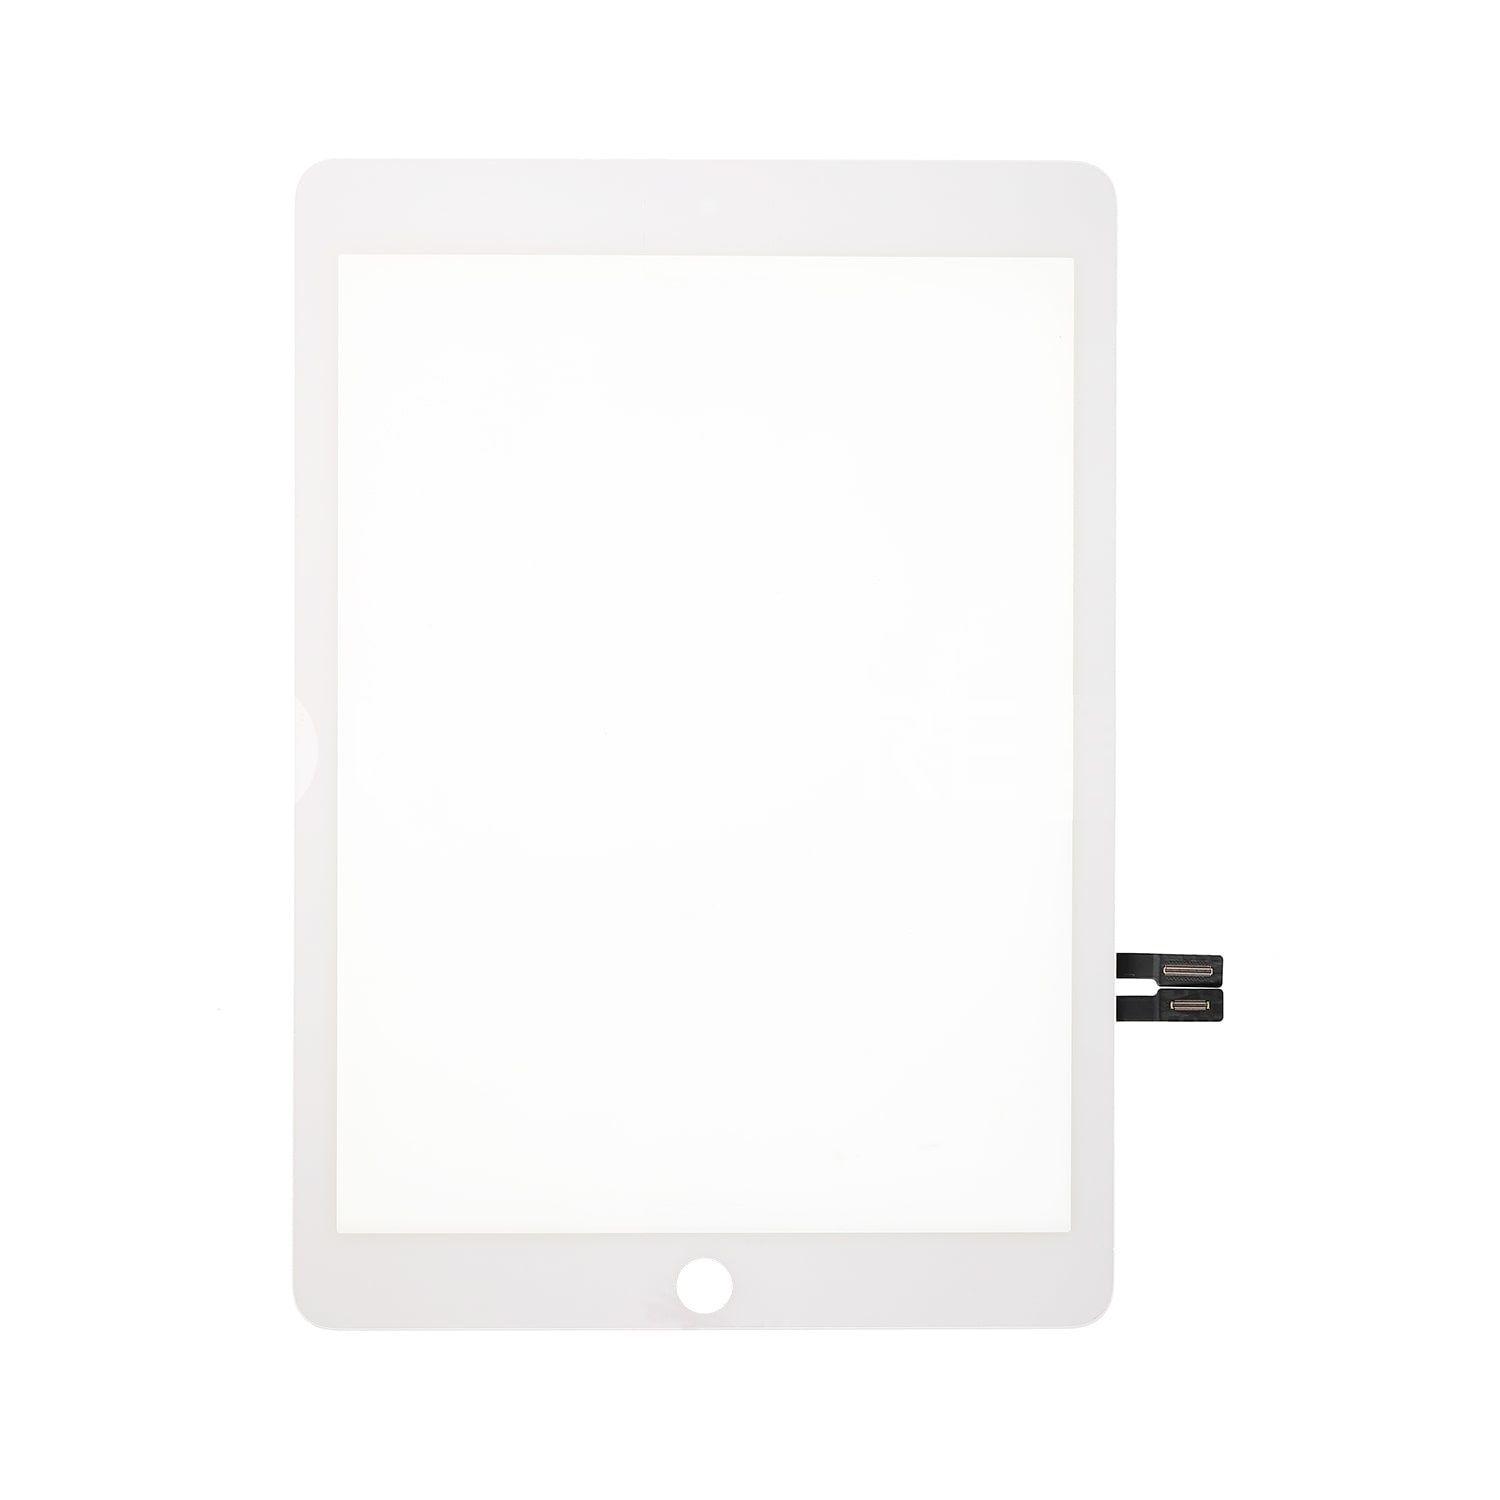 Dotyková vrstva Apple iPad 6 bílá